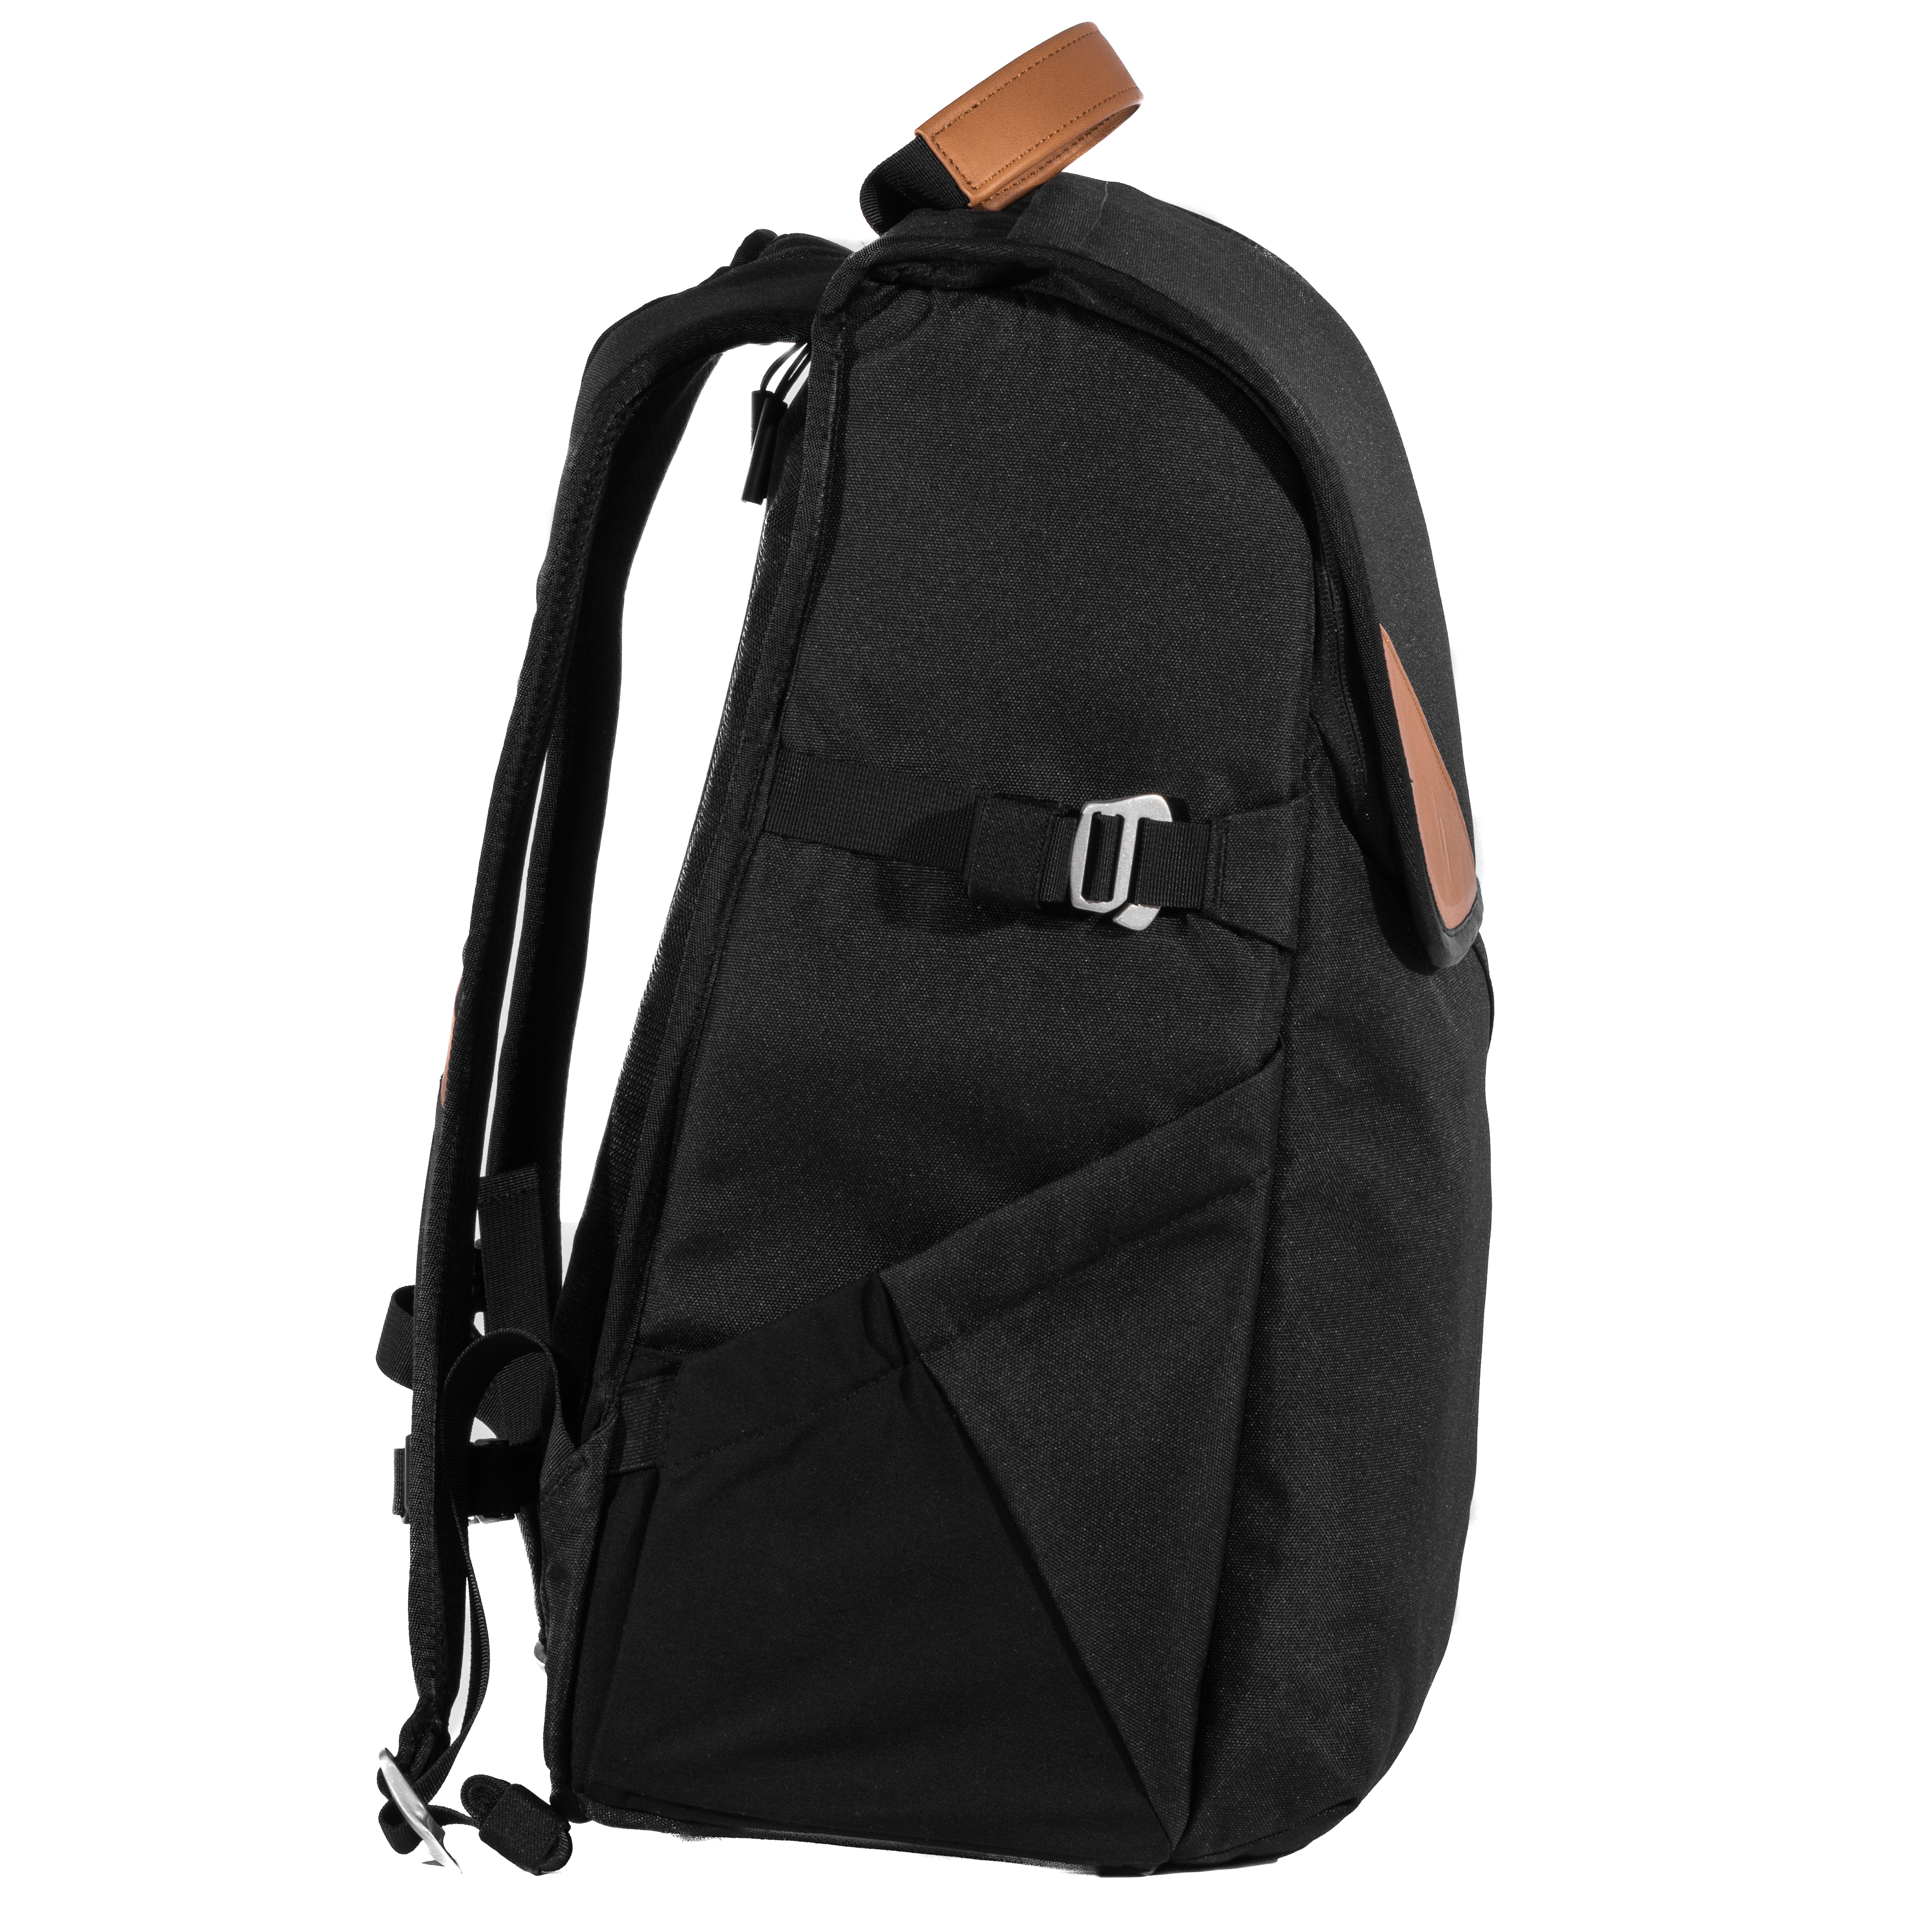 The Original Backpack